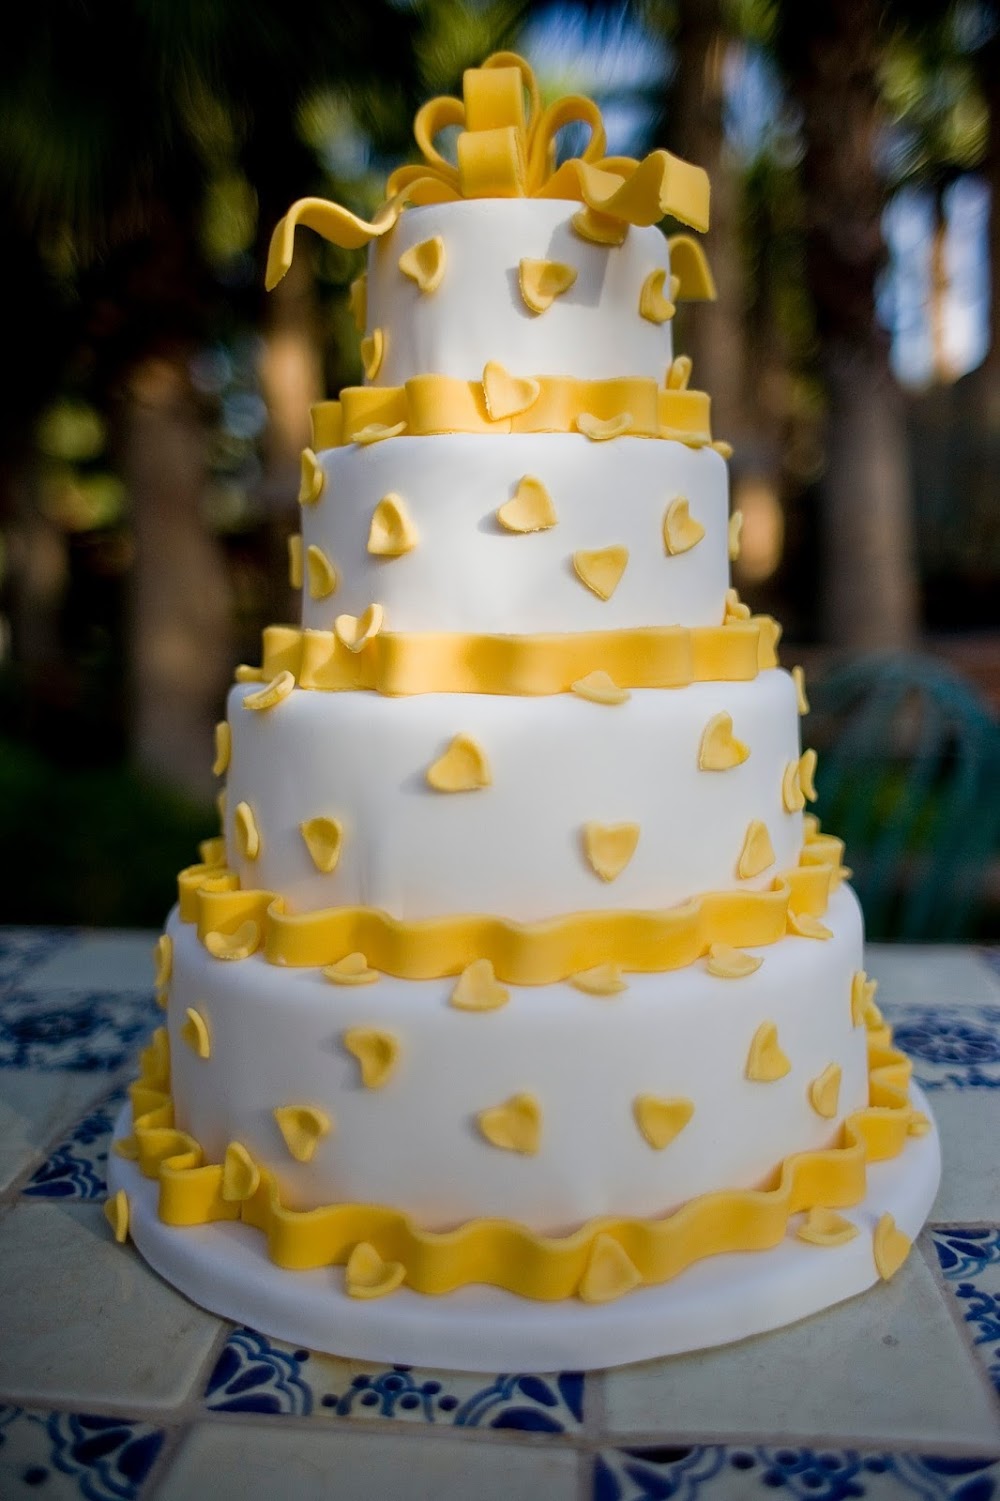 My good cake. Торт с желтыми цветами. Свадебный торт желтый. Красивый желтый торт. Бело желтый торт.